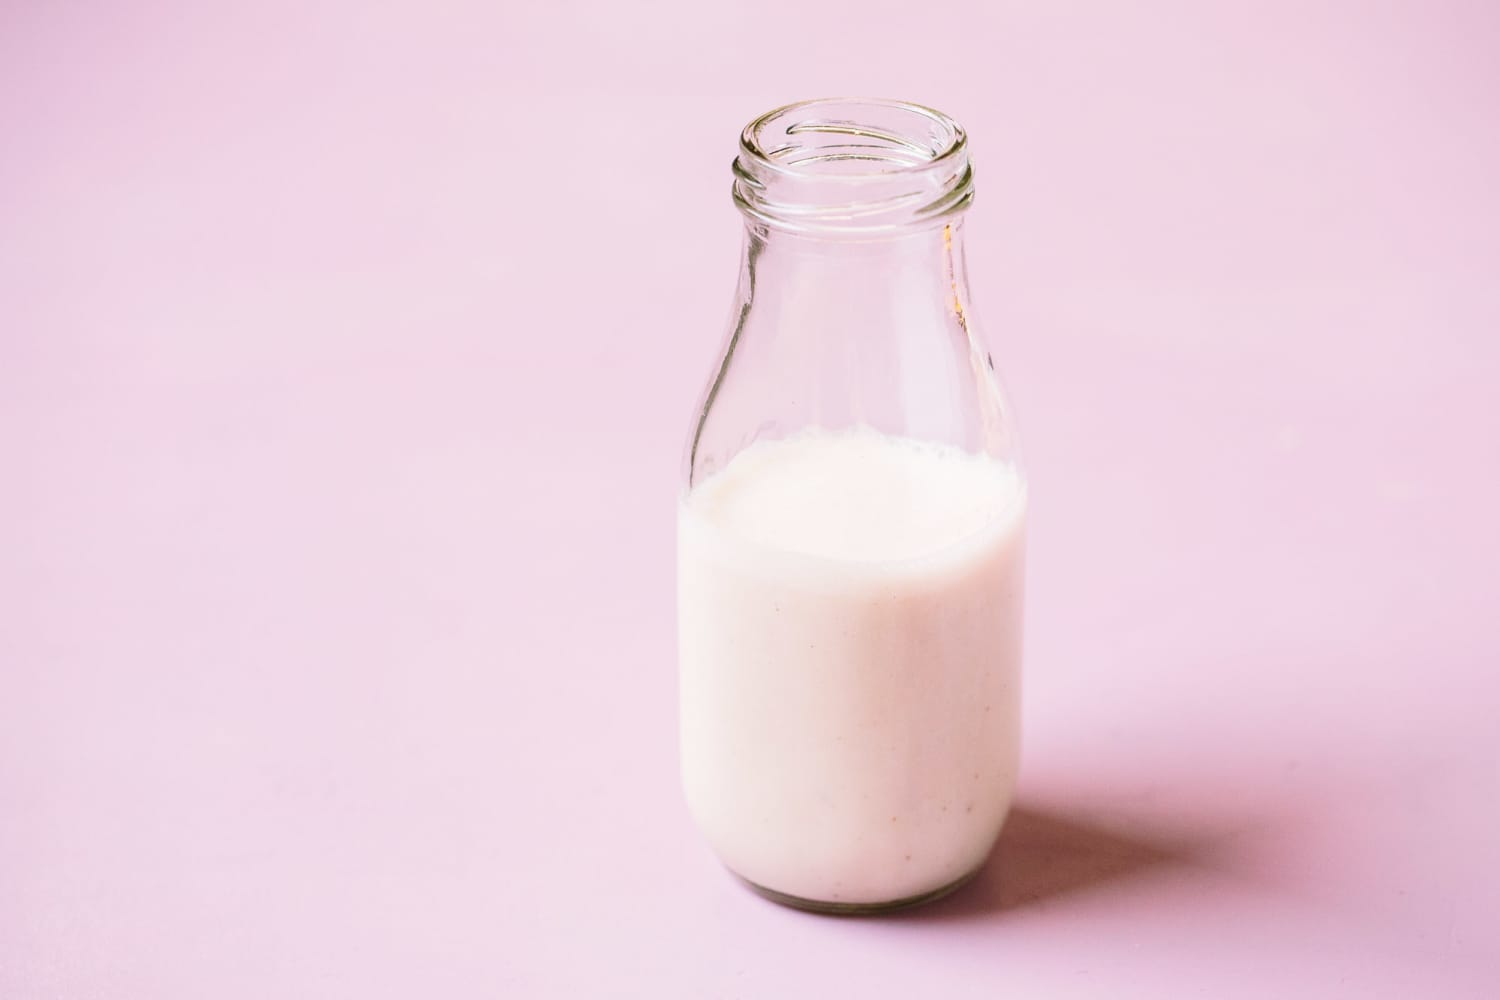 skim milk meaning